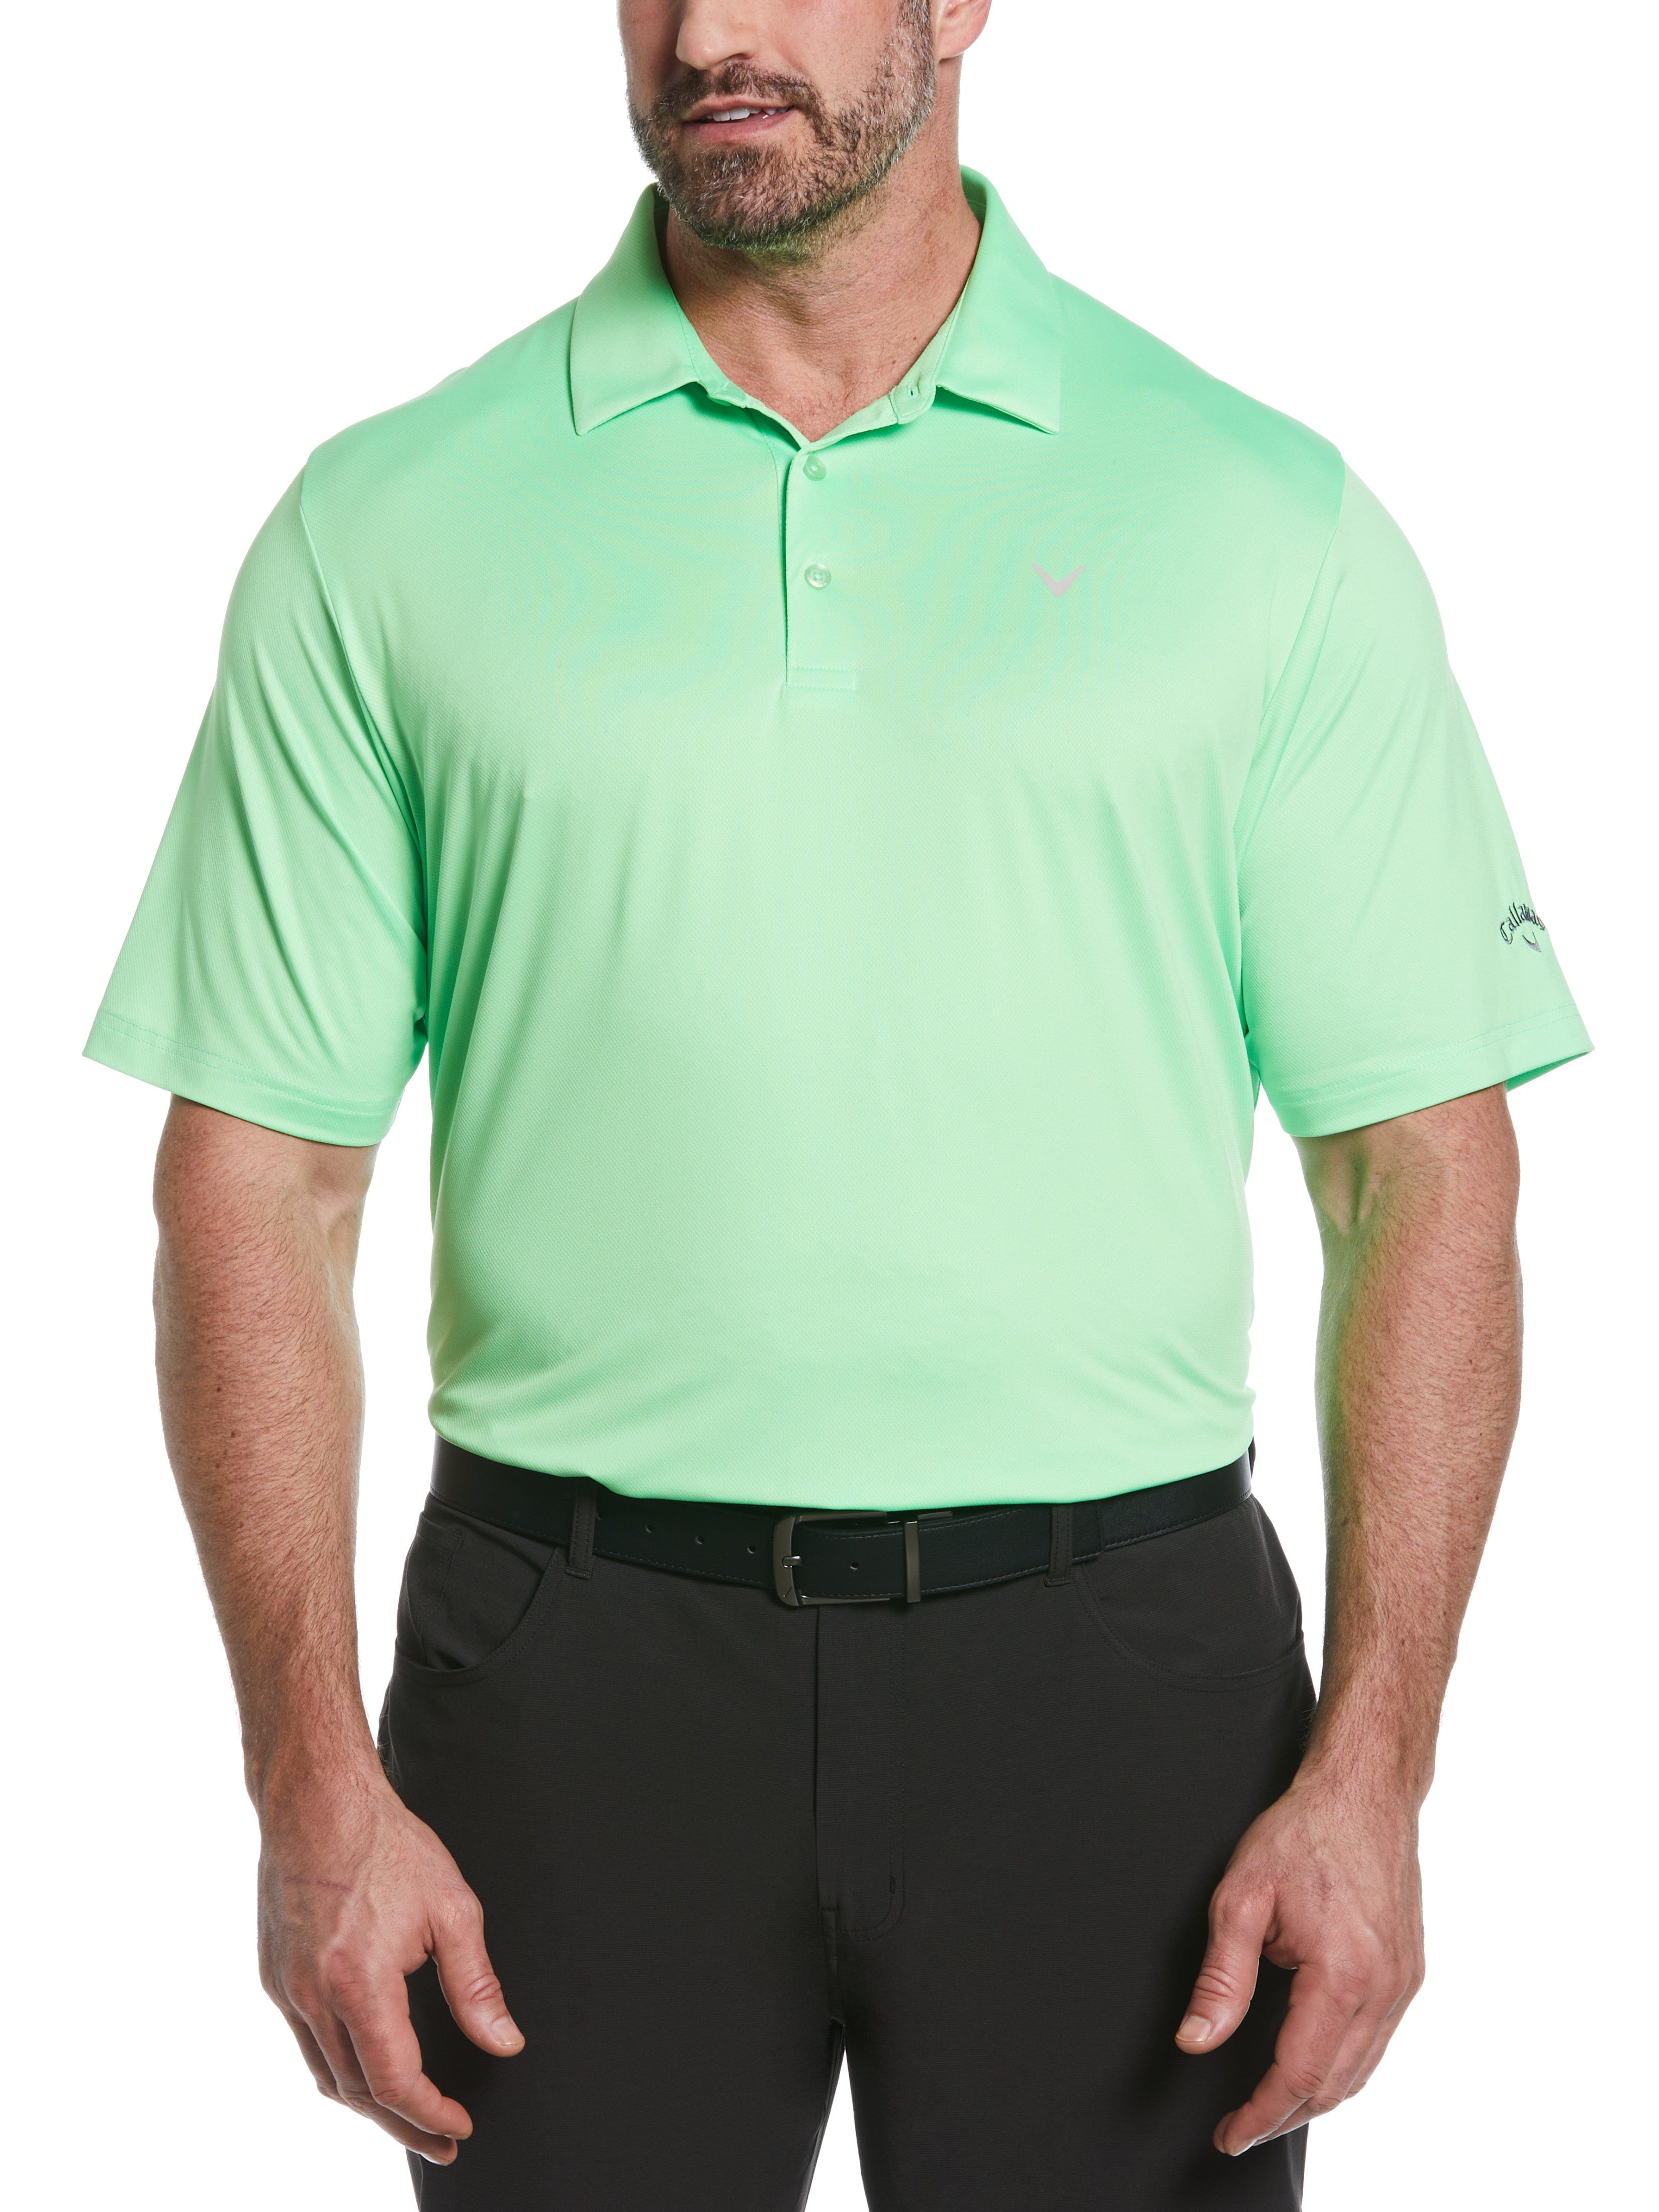 Callaway Apparel Mens Big & Tall Solid Swing Tech Golf Polo Shirt, Size 4X, Summer Green, Polyester/Elastane | Golf Apparel Shop